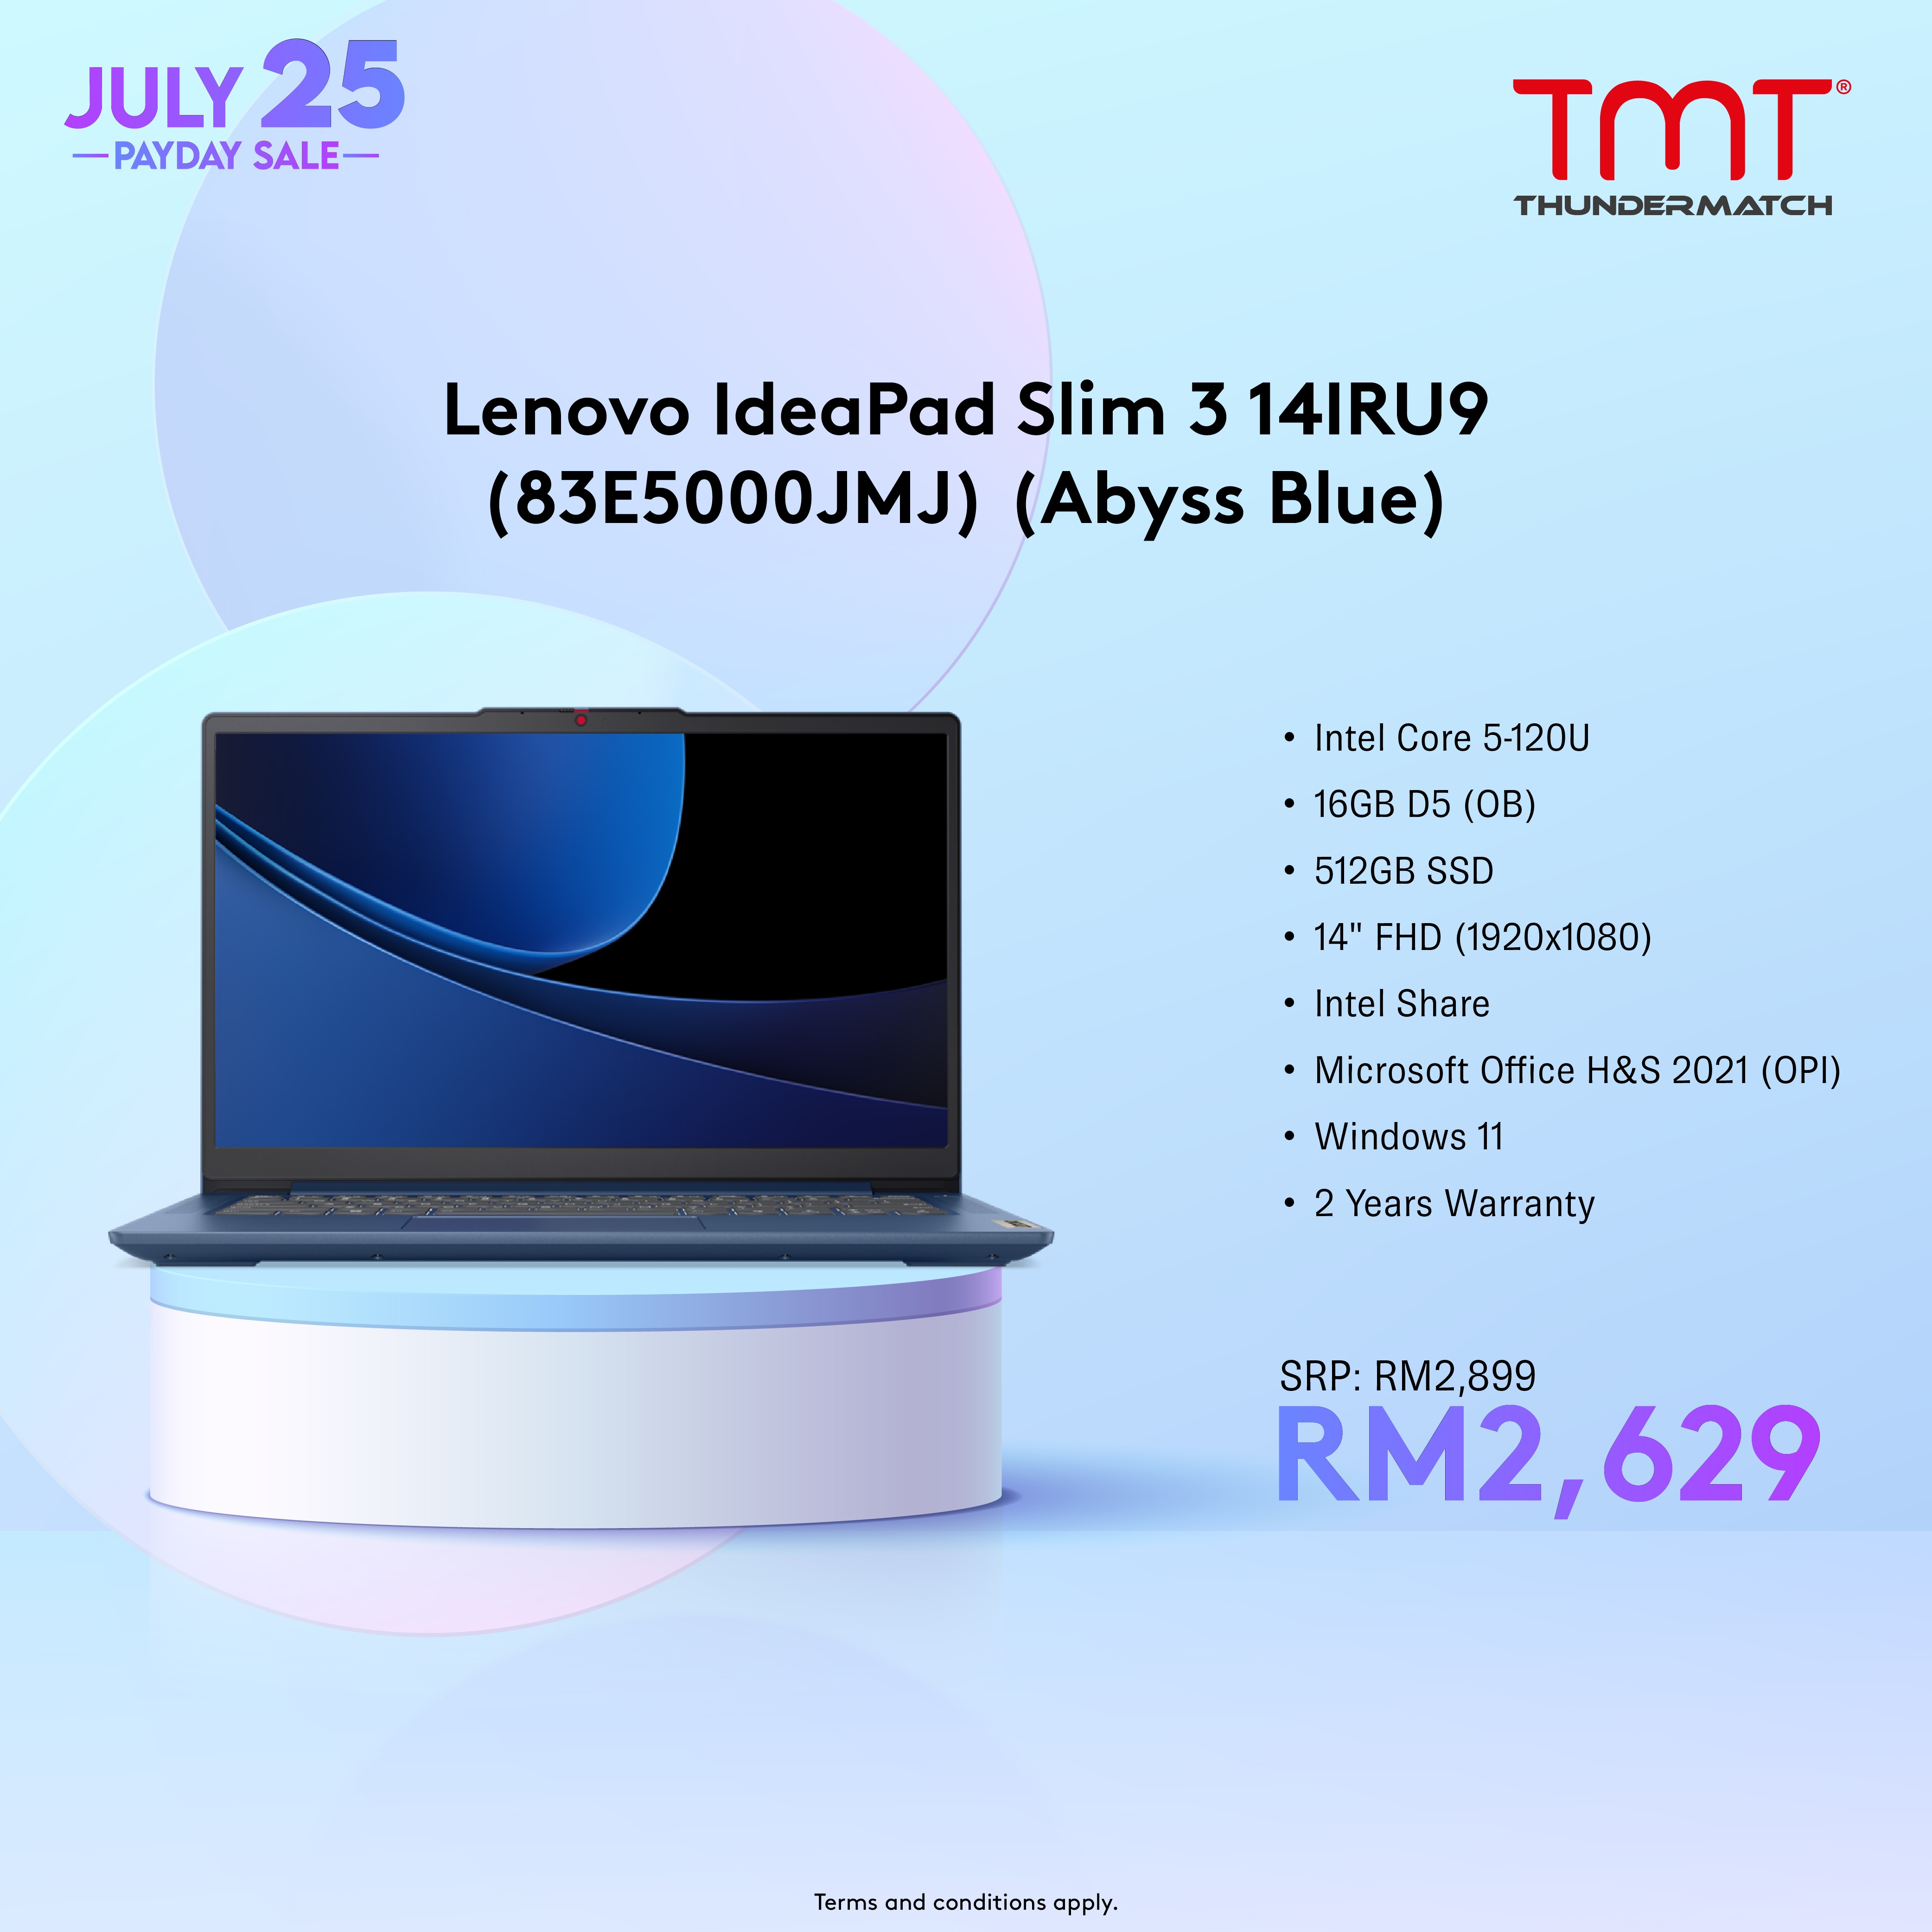 Lenovo IdeaPad Slim 3 14IRU9 (83E5000JMJ/83E5000KMJ) | Intel Core 5-120U | 16GB RAM 512GB SSD | 14" FHD(1920x1080) | Intel Share | MS Office H&S 2021 | Win11 | 2Y Warranty